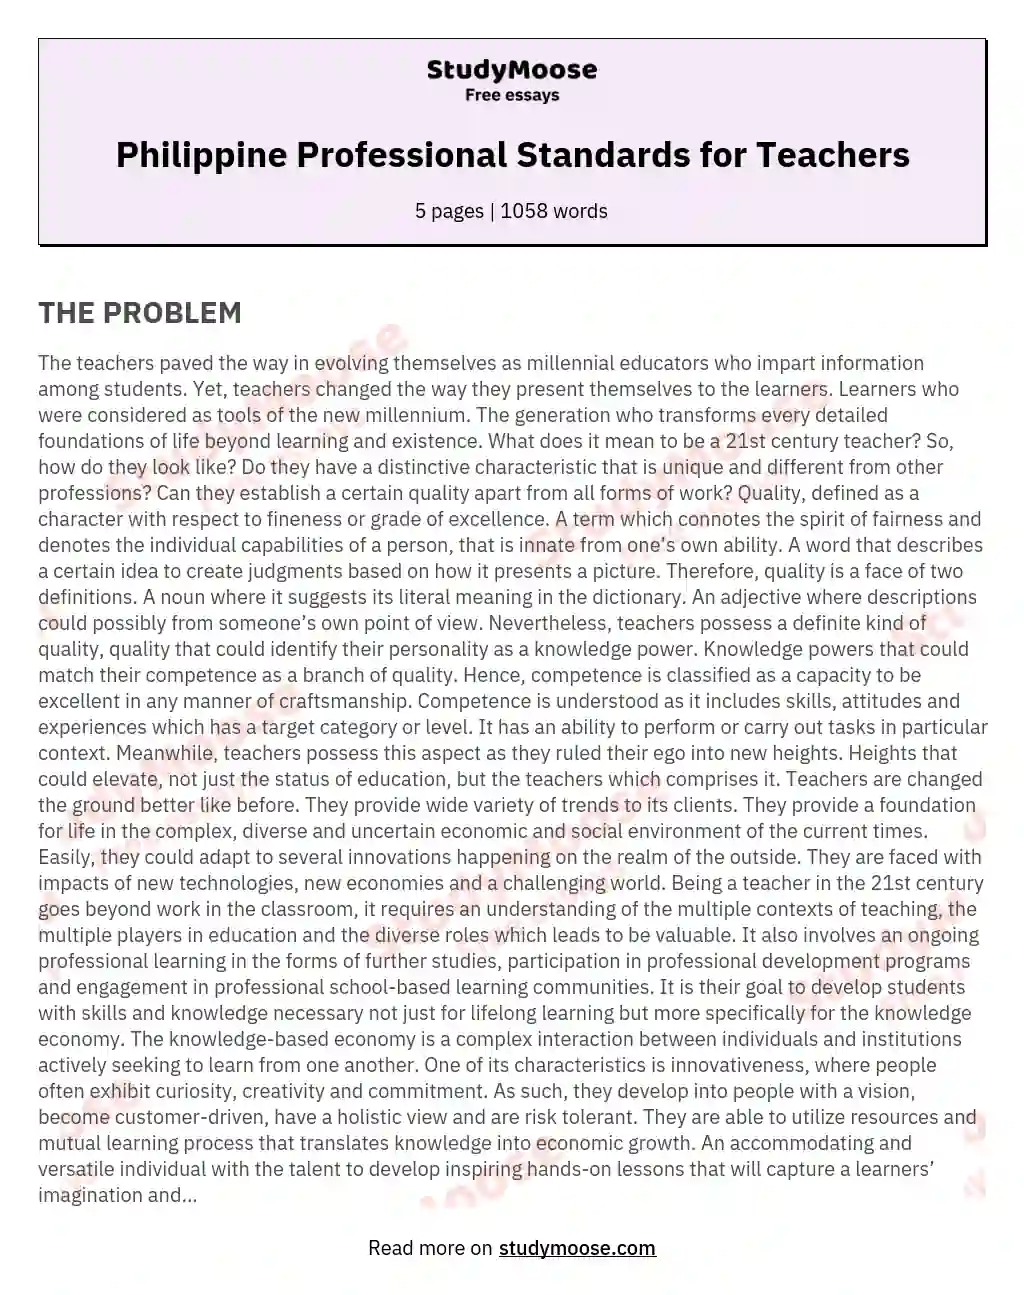 Philippine Professional Standards for Teachers essay